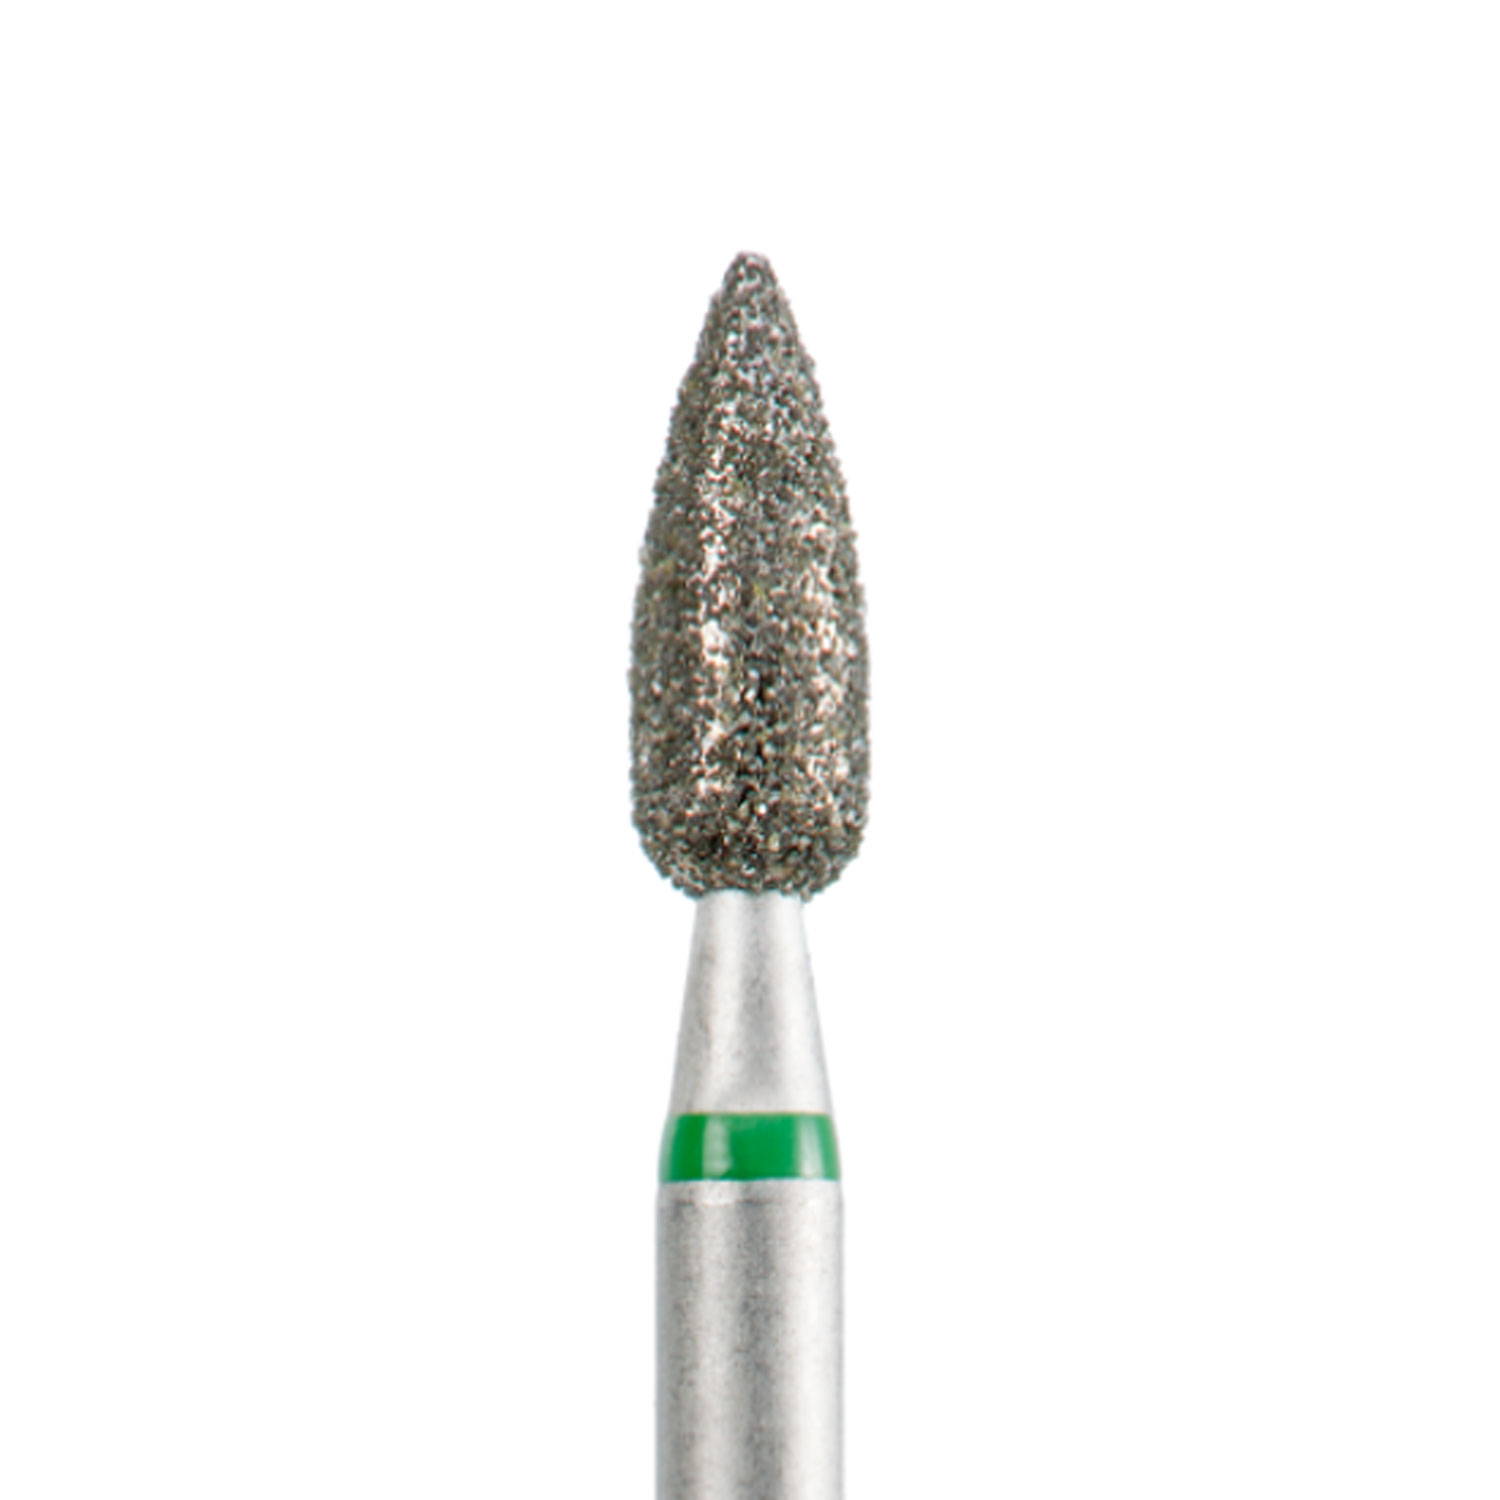 Acurata galvanic diamond instruments 534 AC-162 ACURATA - Arrow 534 Coarse (Green Ring)